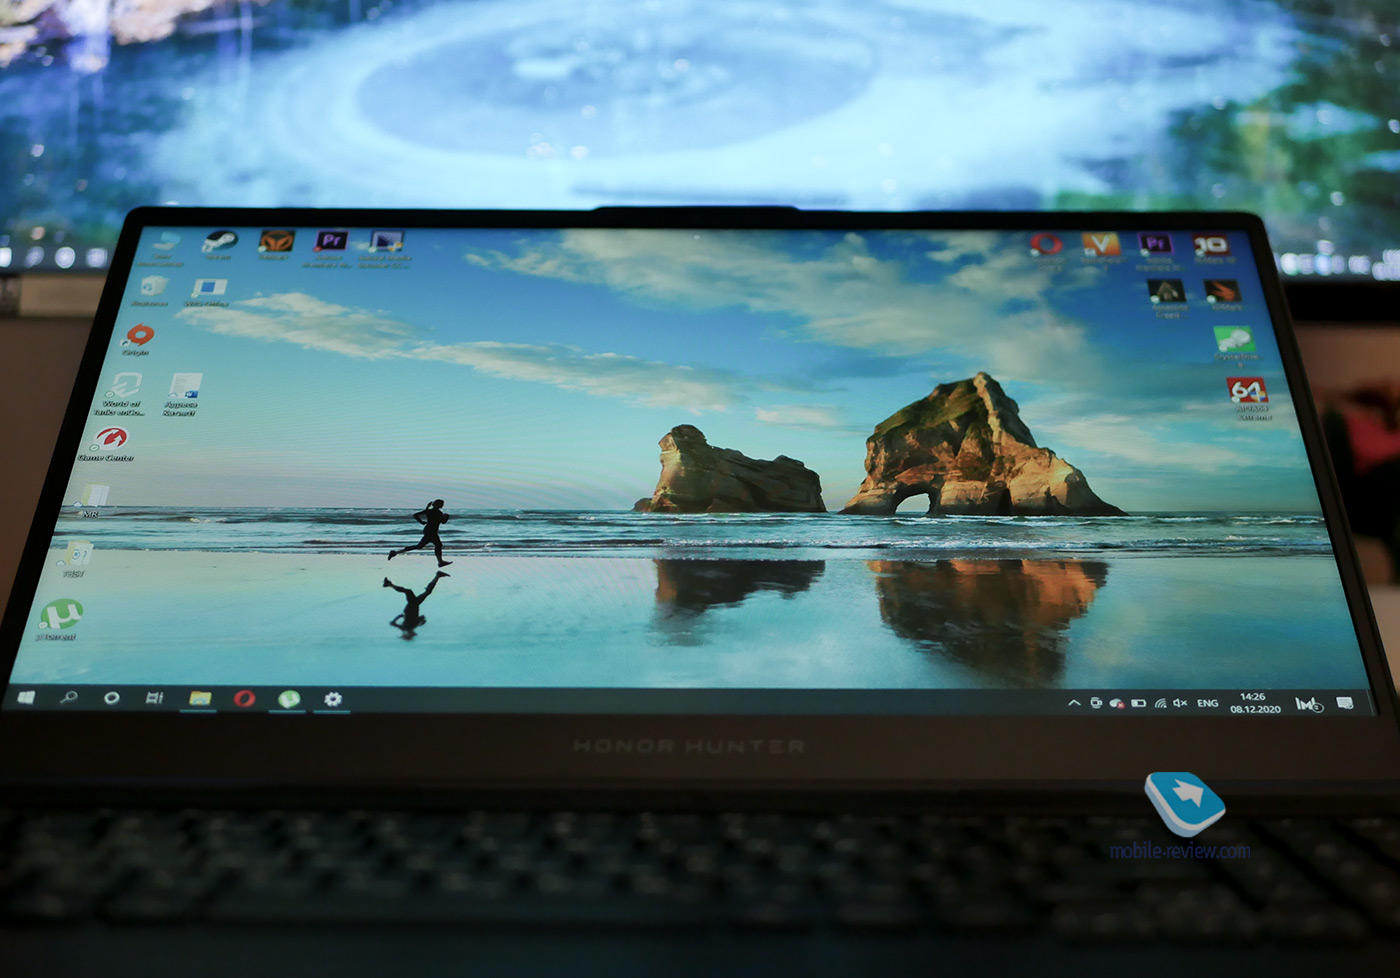 Honor Hunter V700 review: 18+ gaming laptop